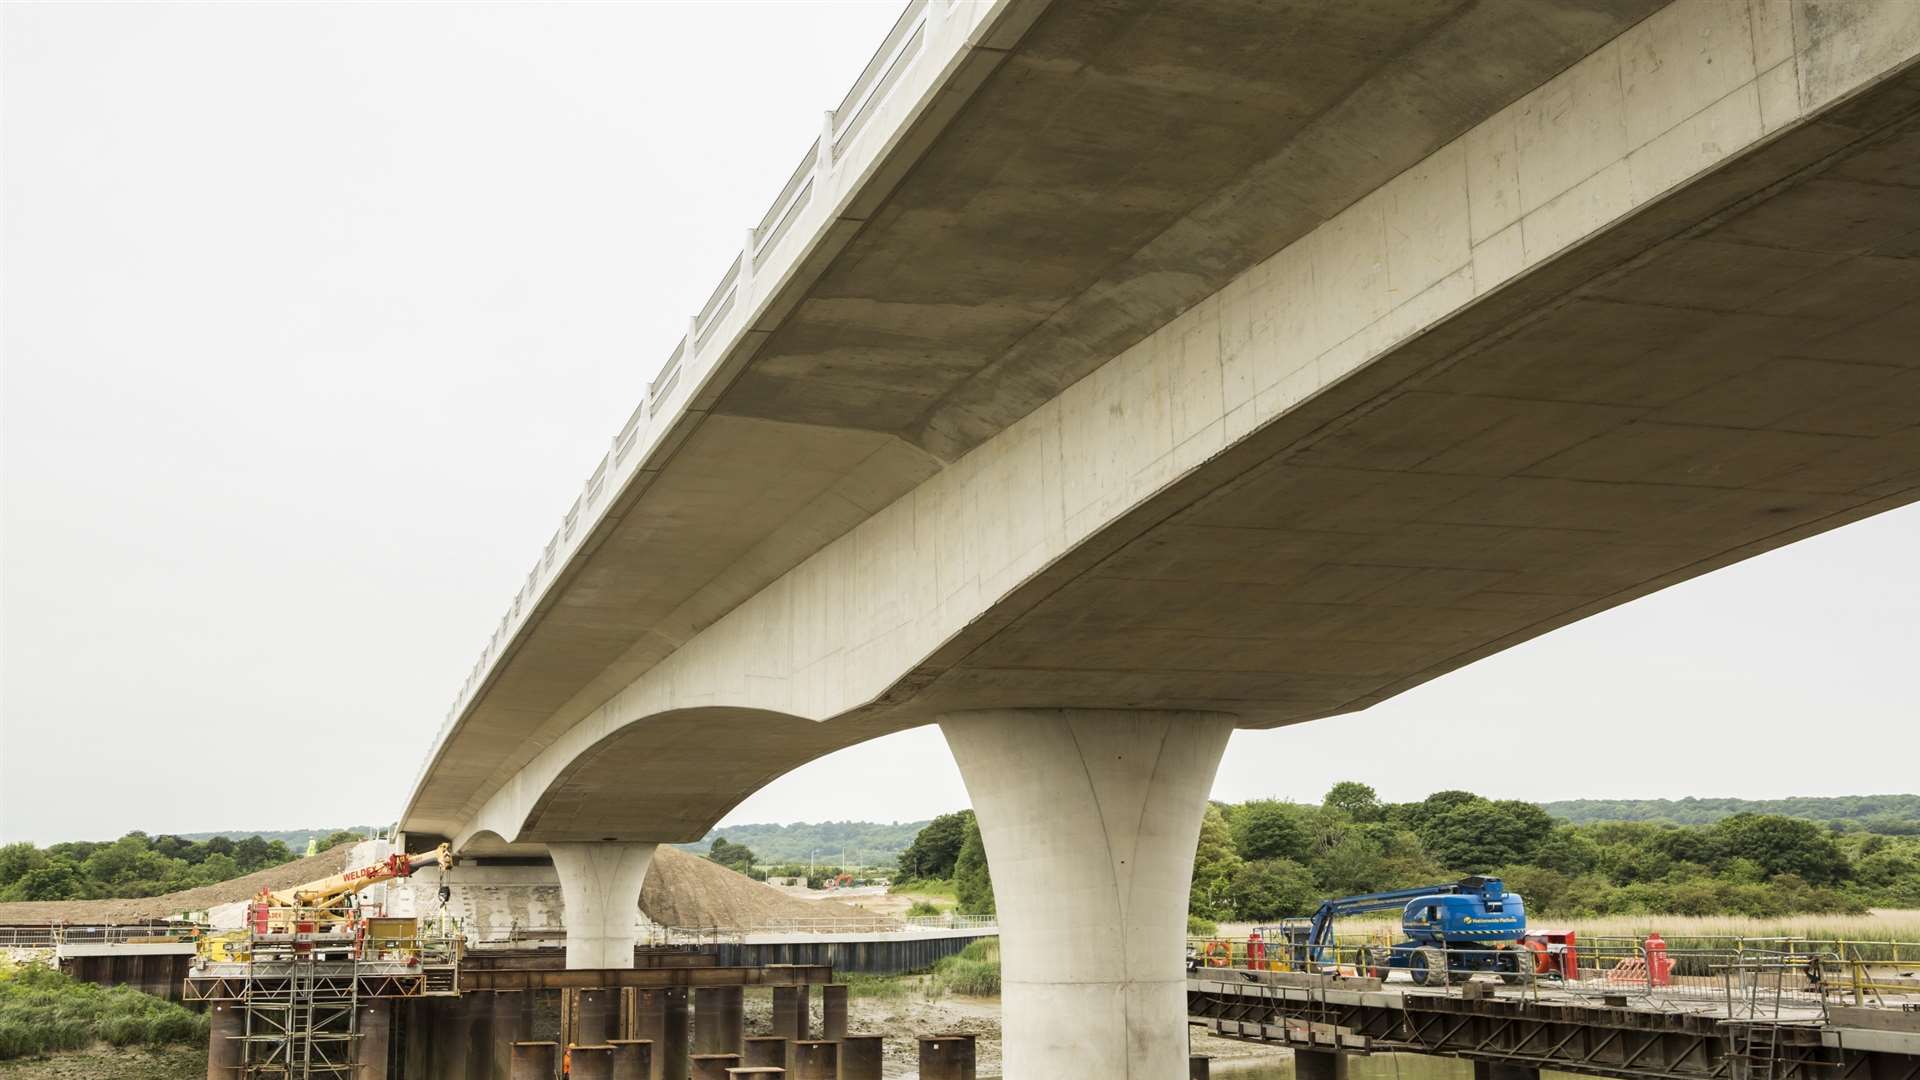 The bridge cost nearly £19m to build